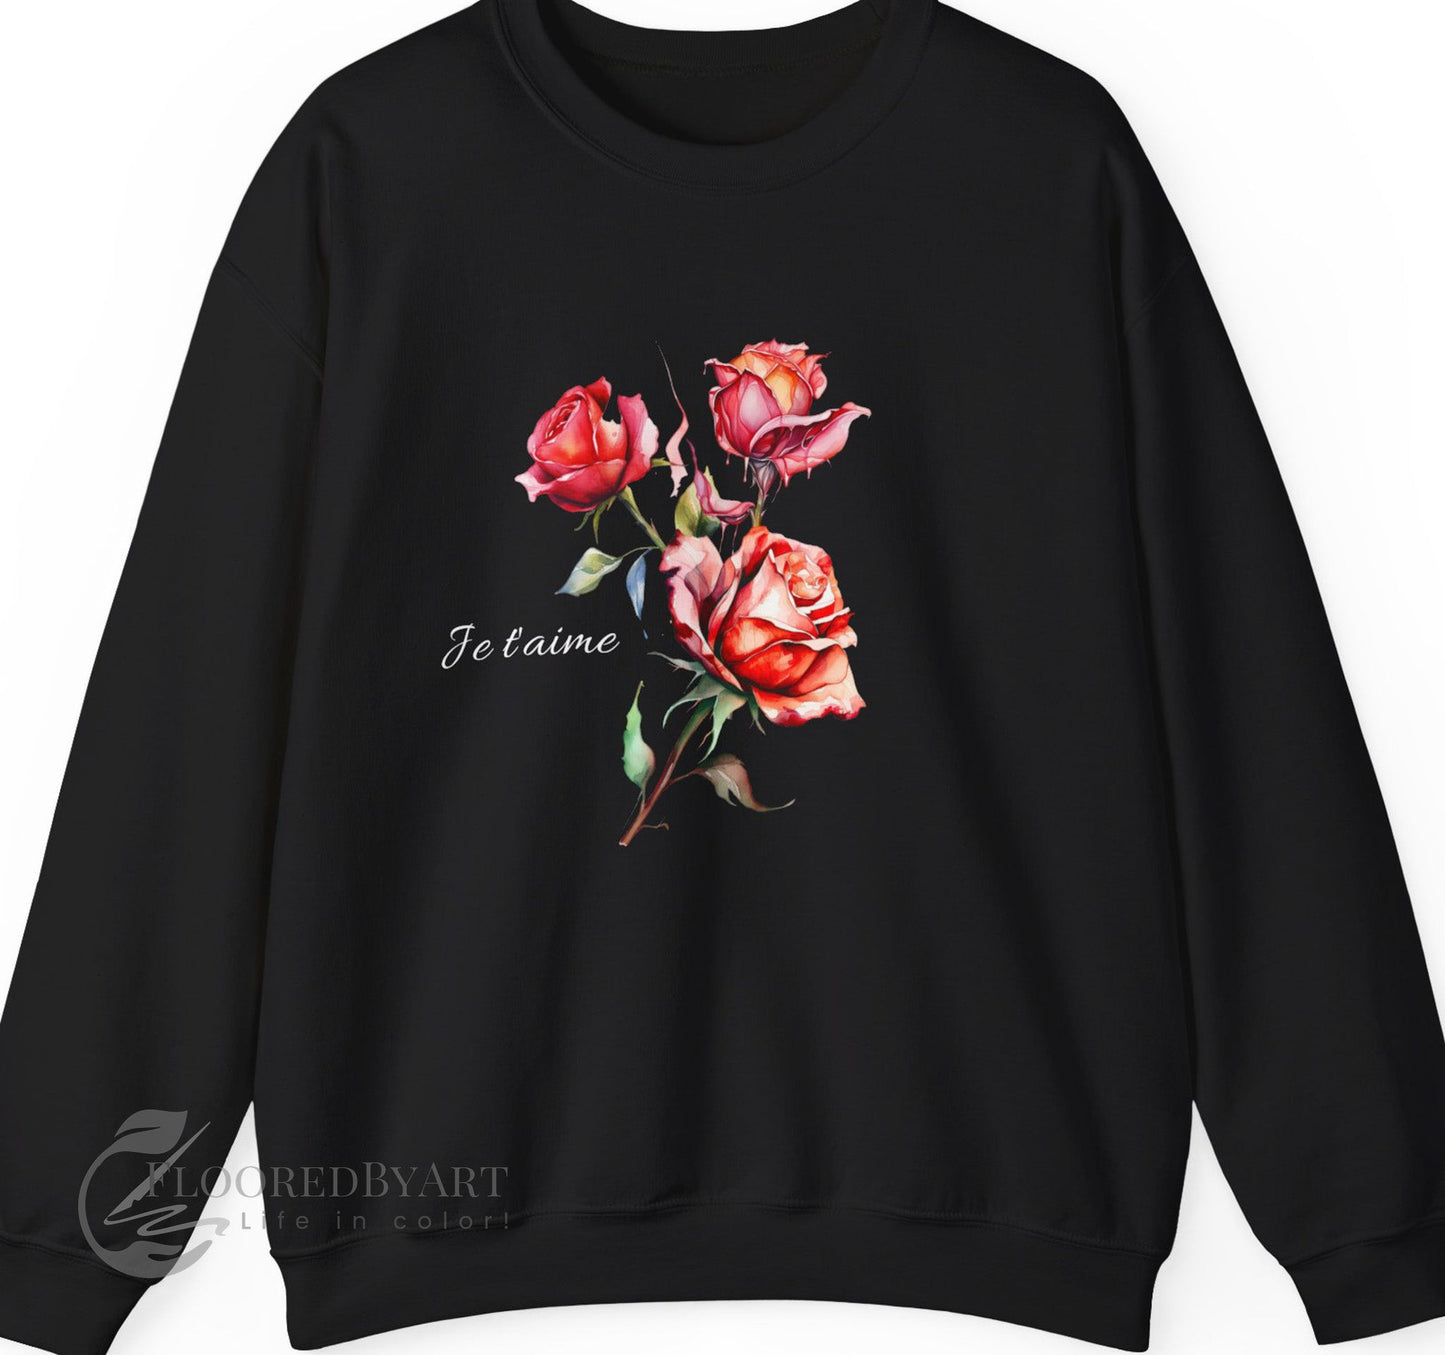 Personalized Womens Valentines Day Sweatshirt, Custom Conversation Roses Shirt - FlooredByArt